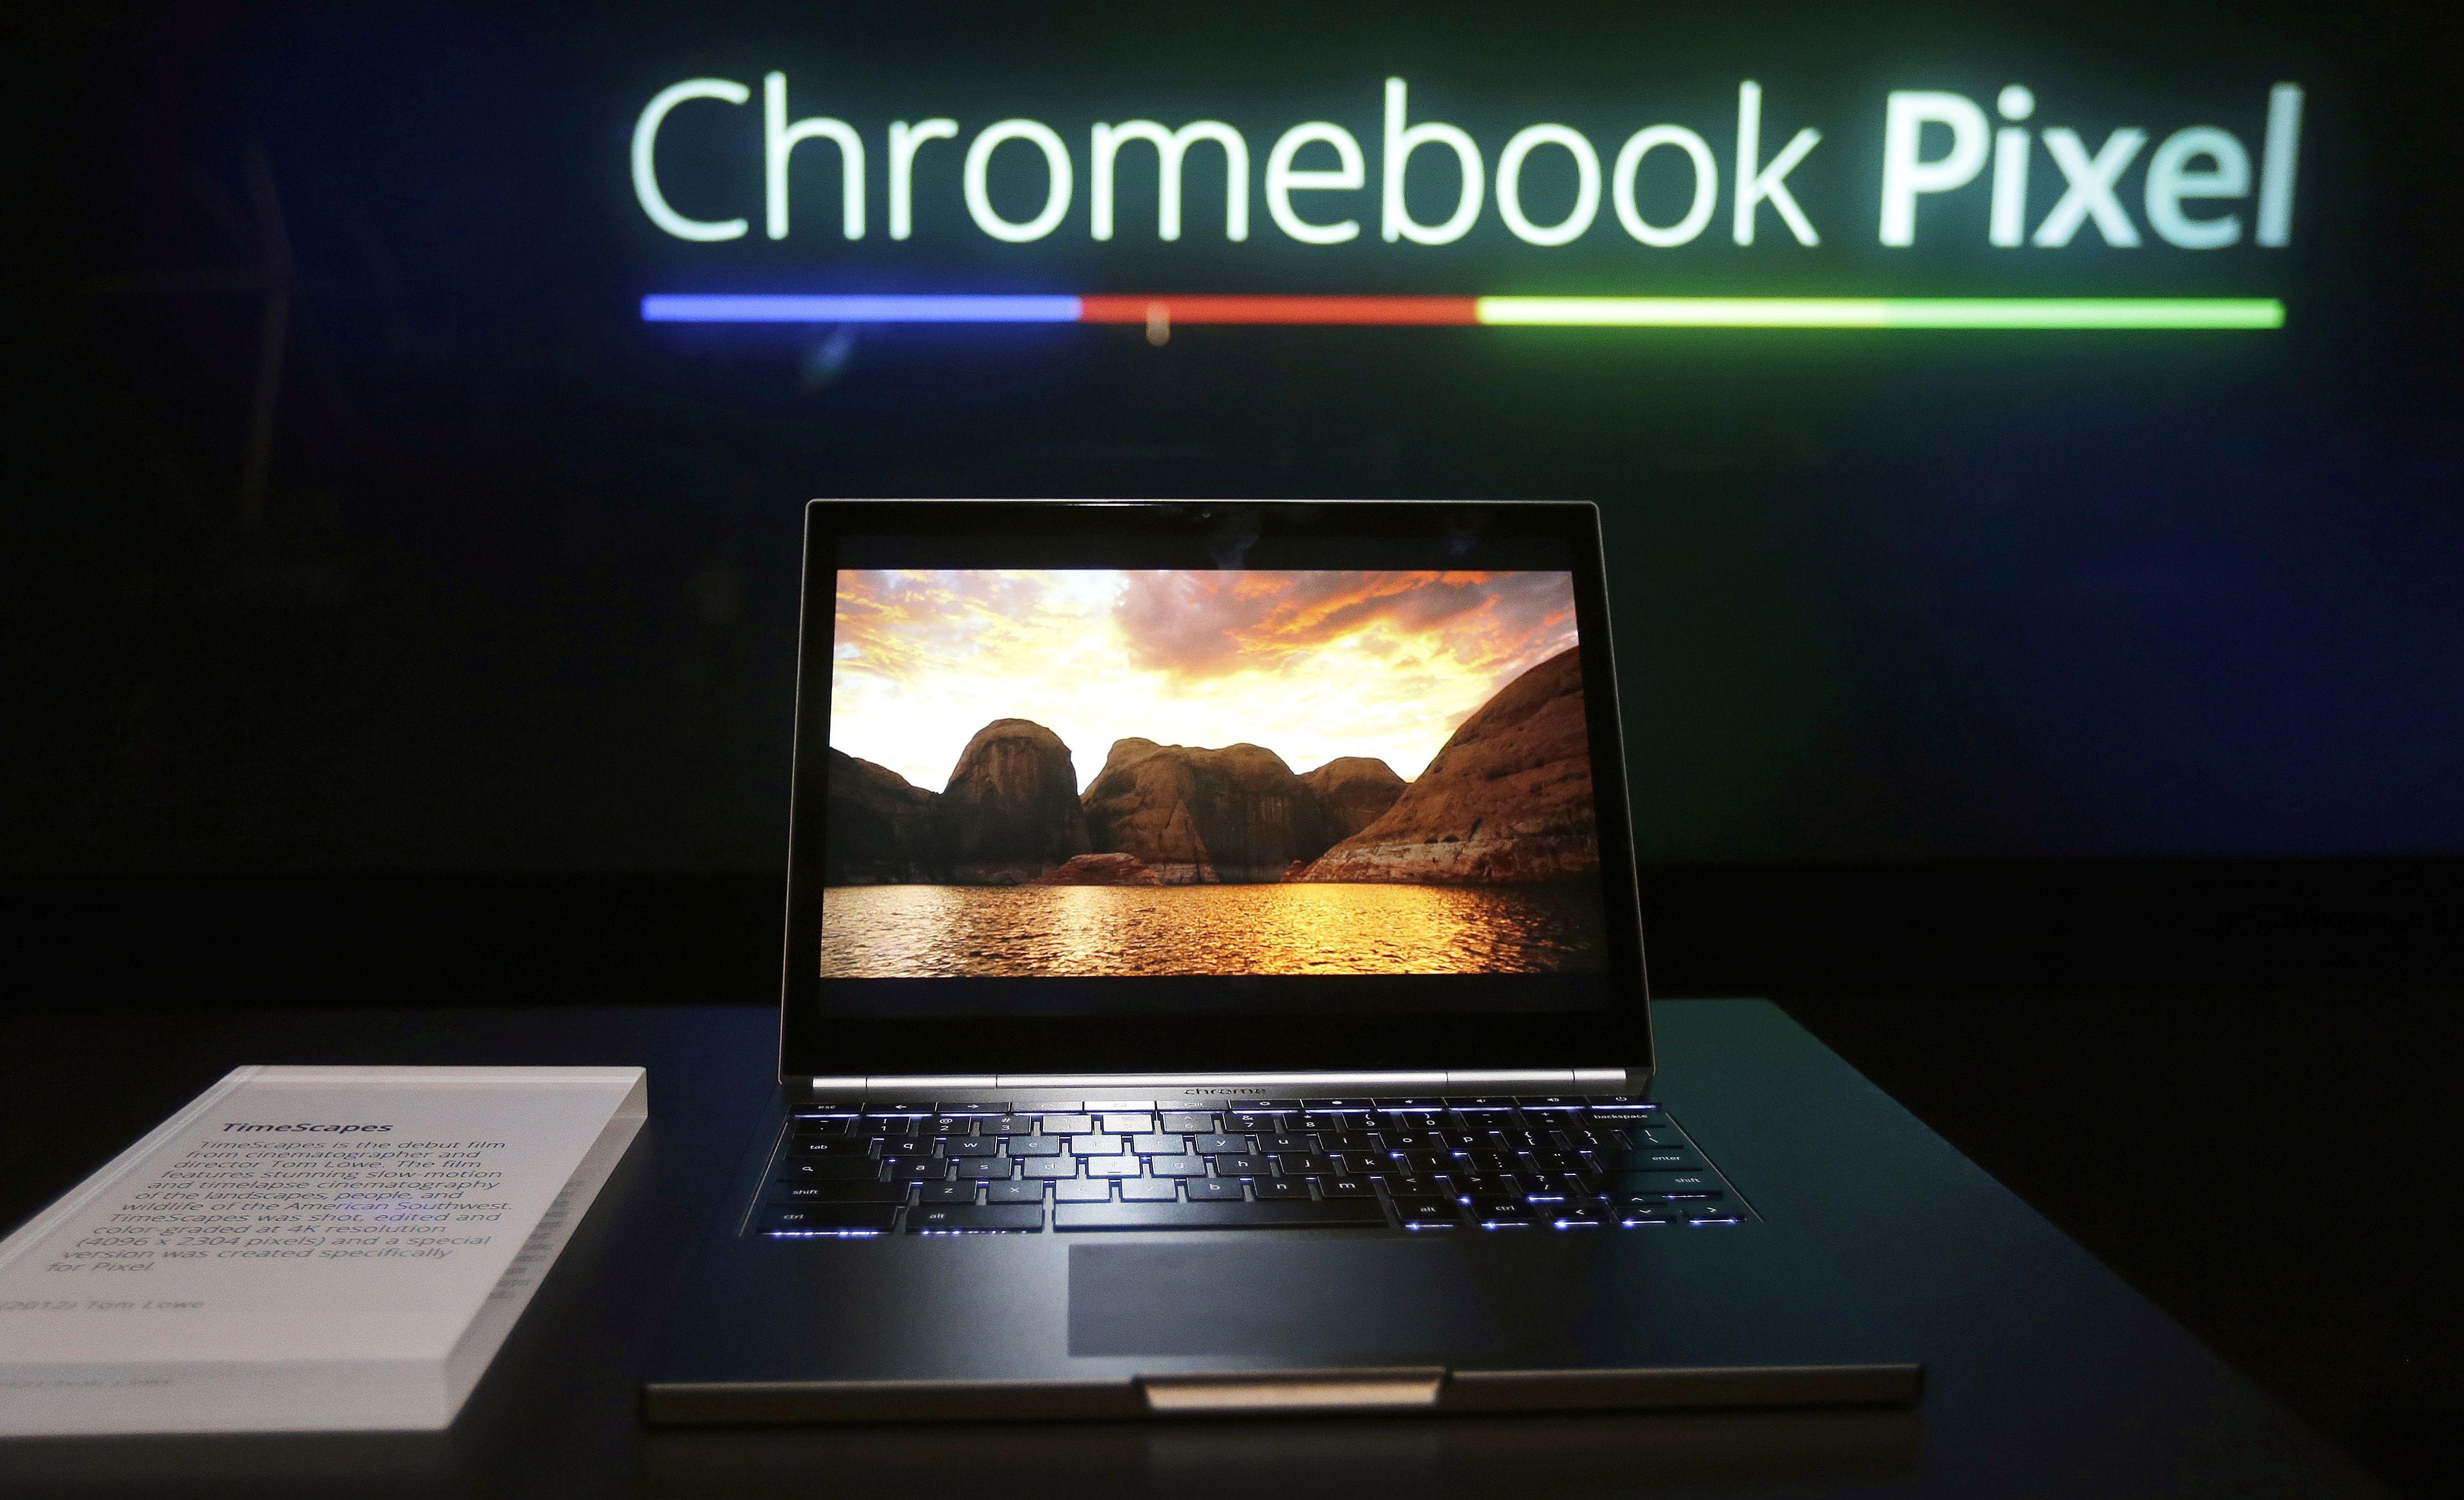 Chromebook Pixel Logo - Google is readying the next Chromebook Pixel version